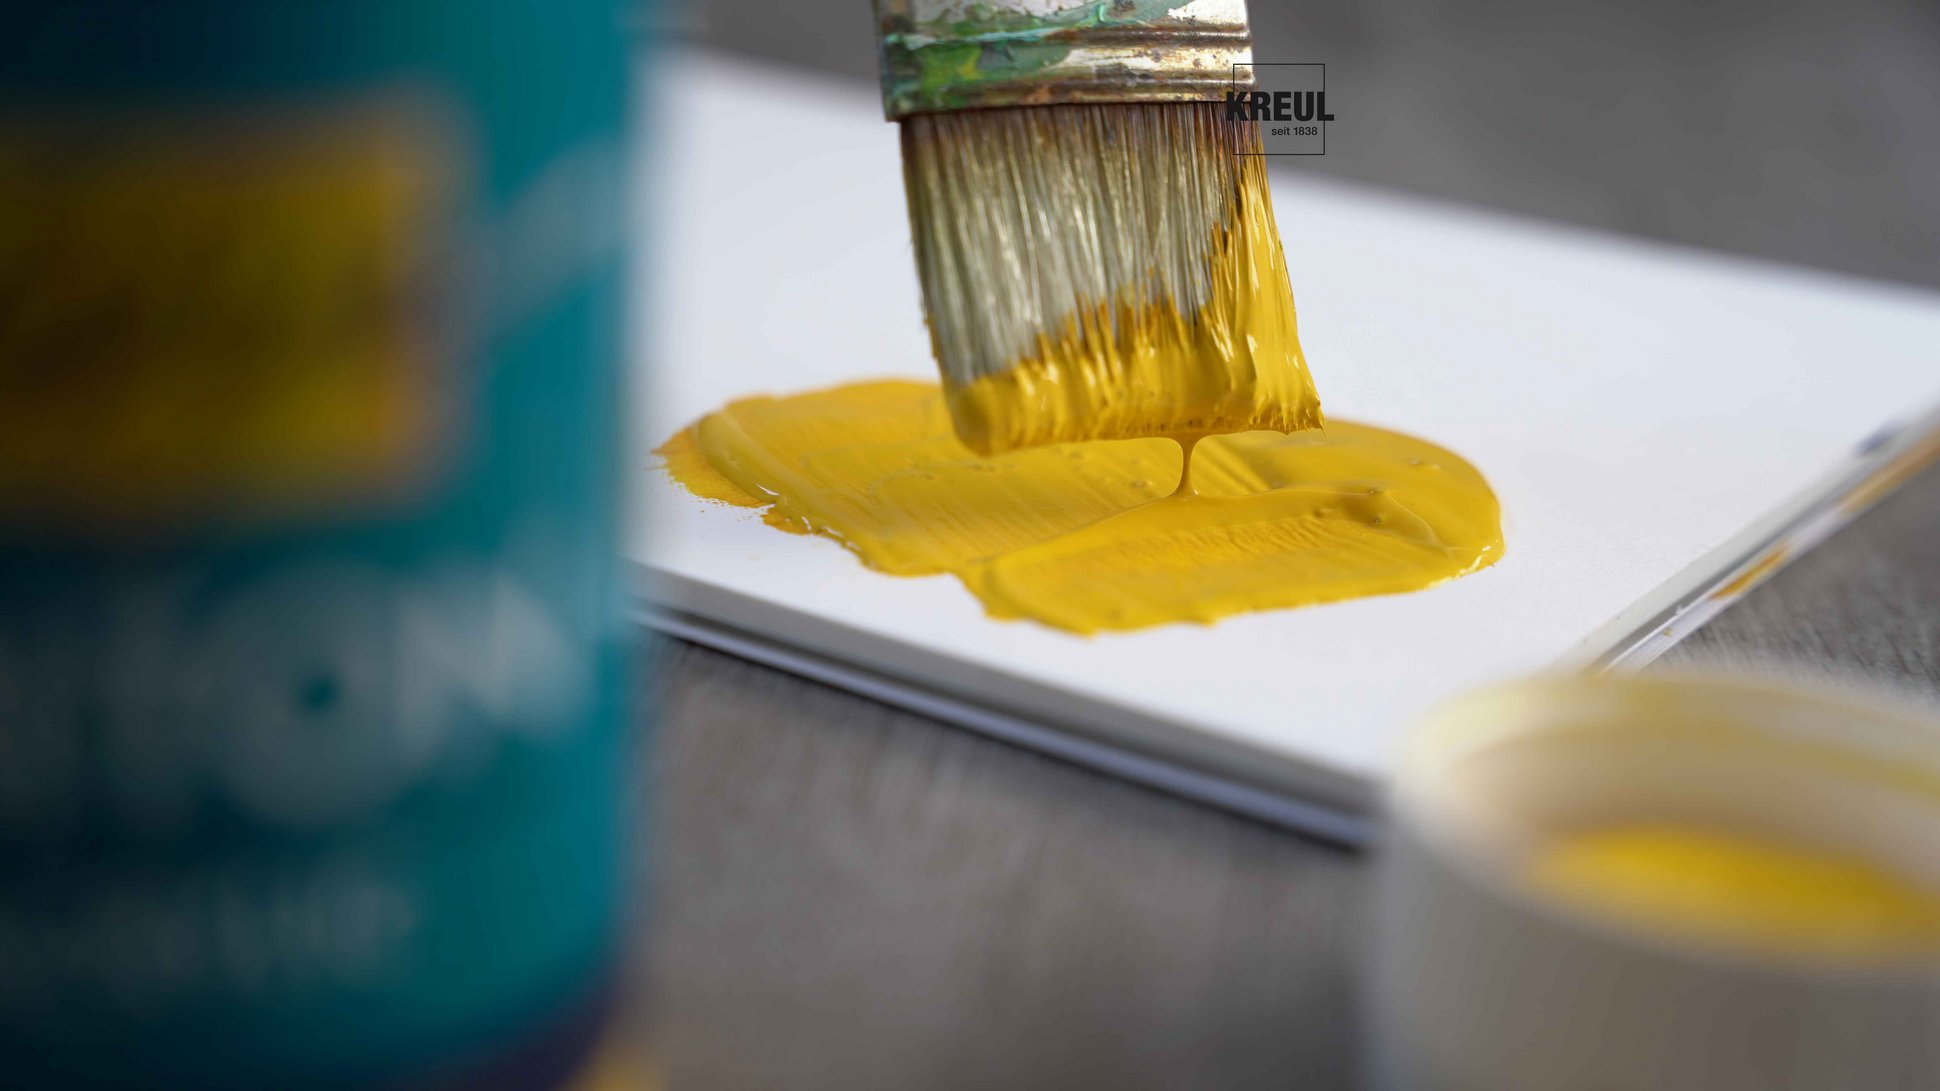 KREUL Triton Acrylic Farbe Künstler Malen gelb